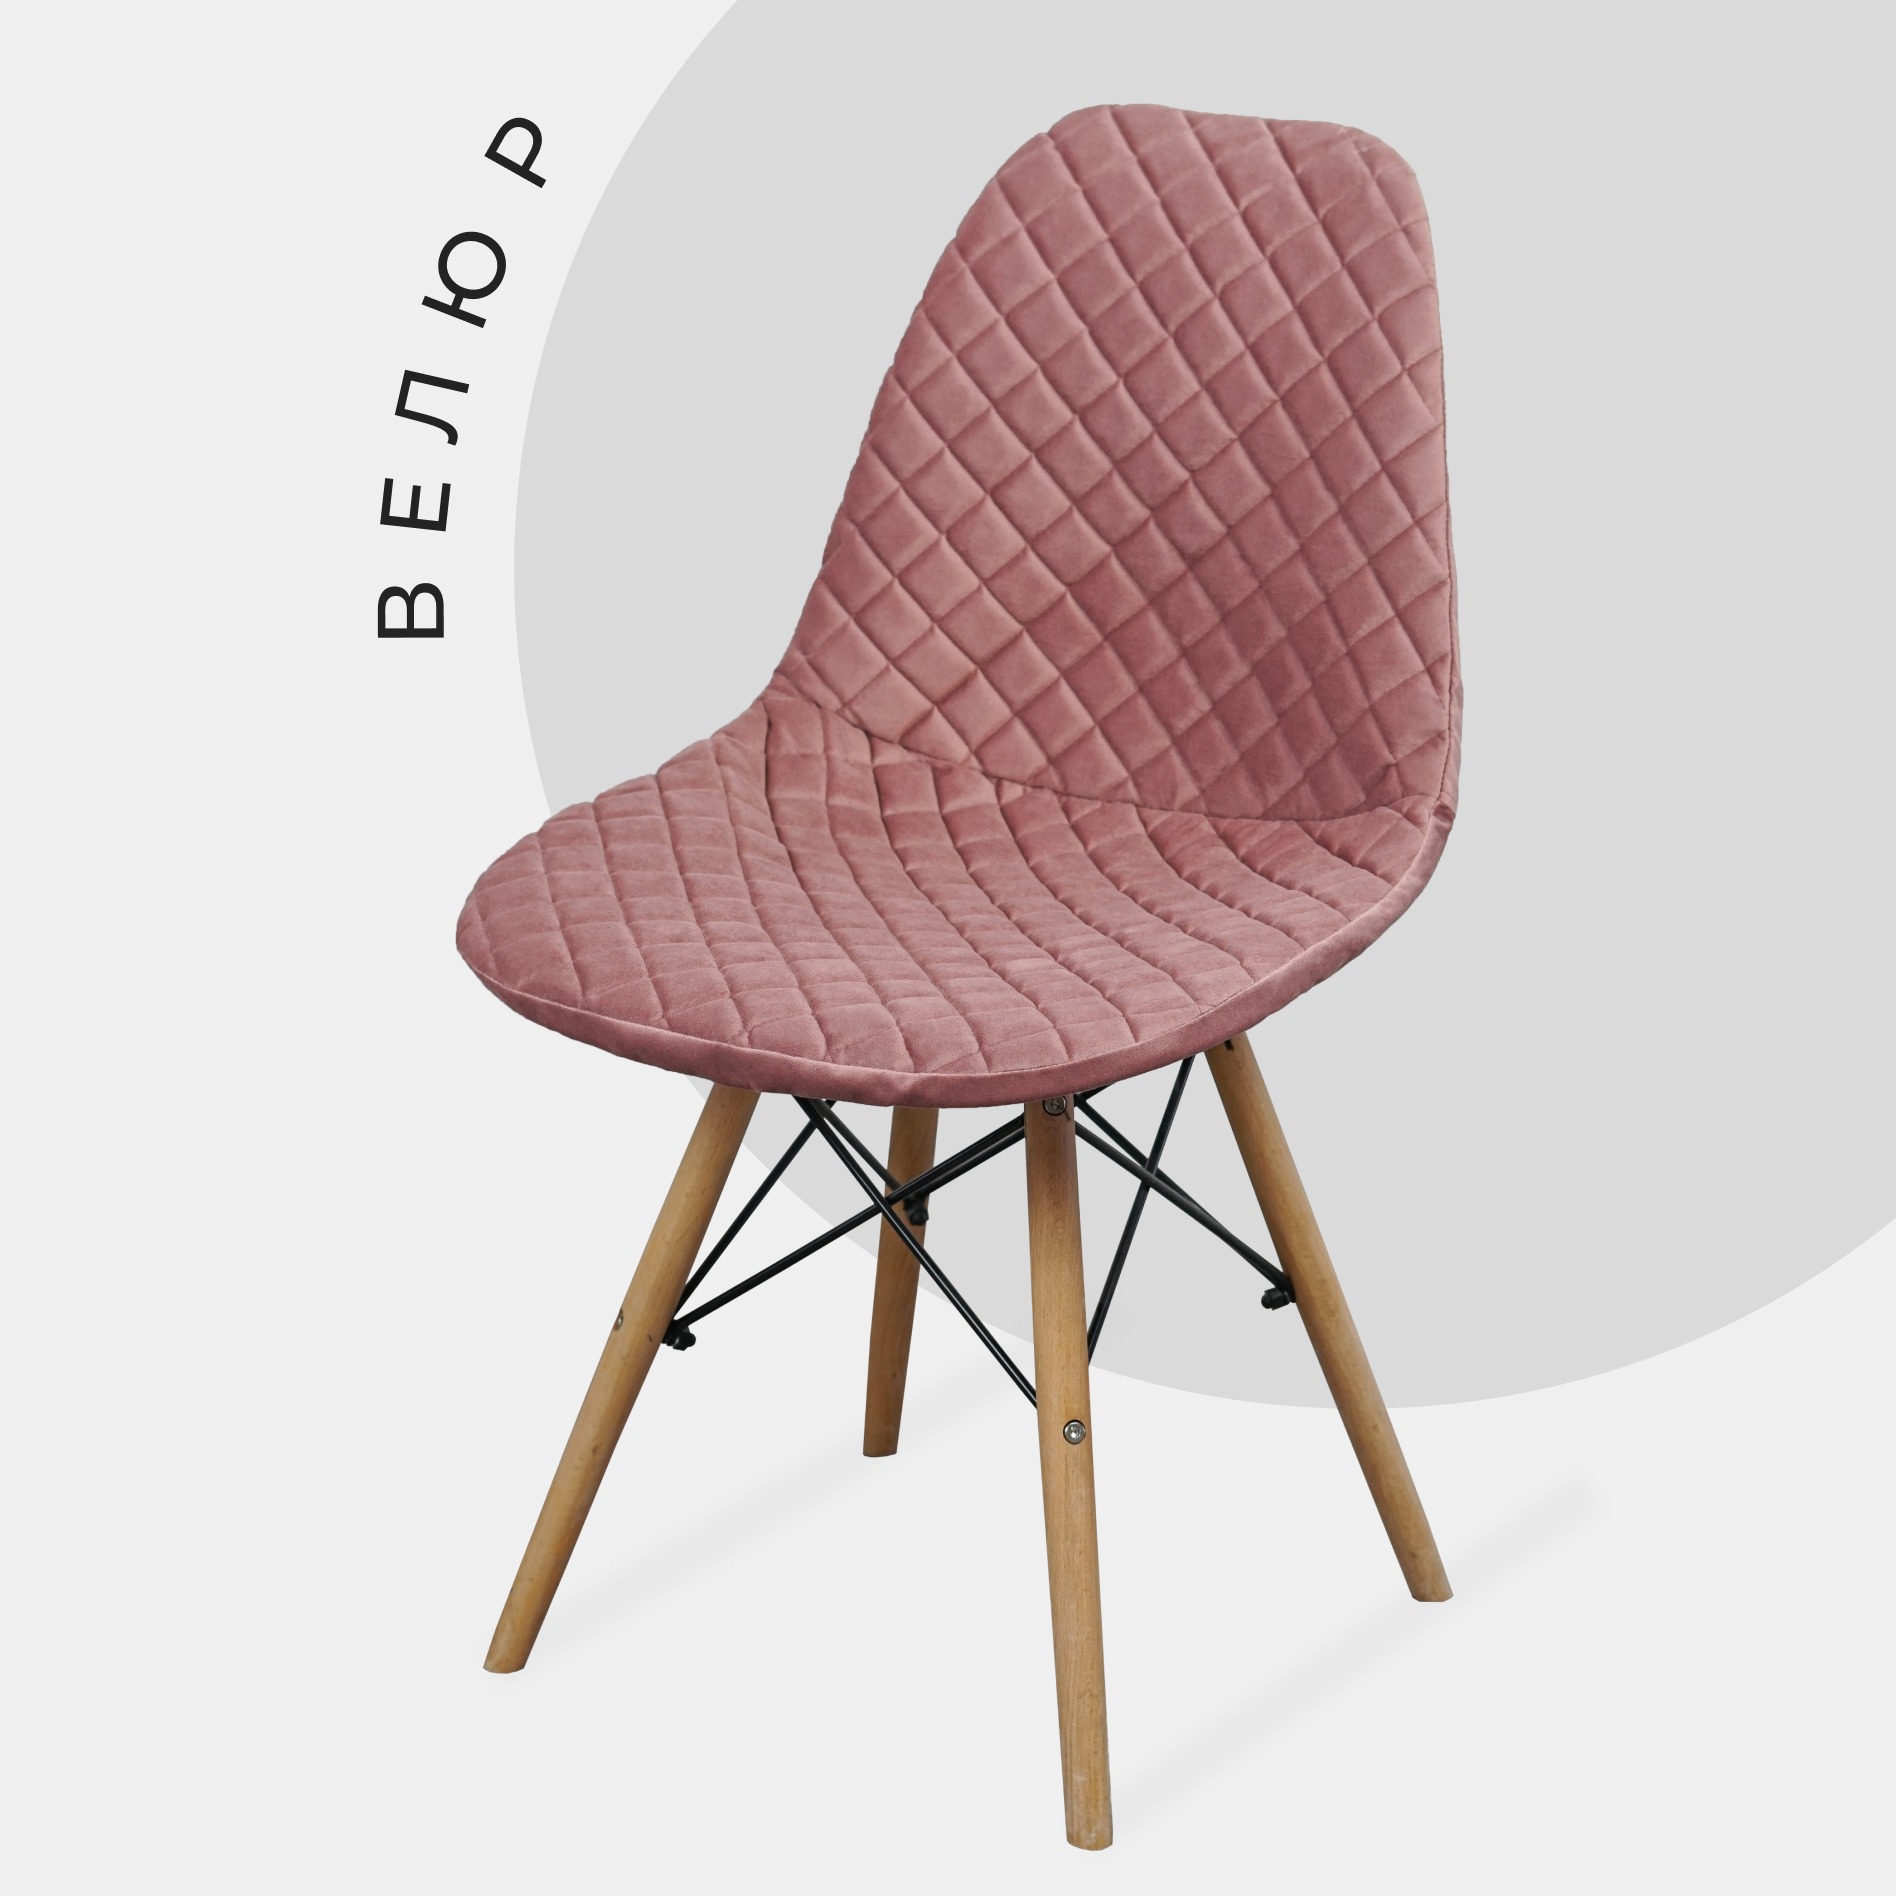 Чехол на стул со спинкой Eames из велюра, 40х46см, розовый